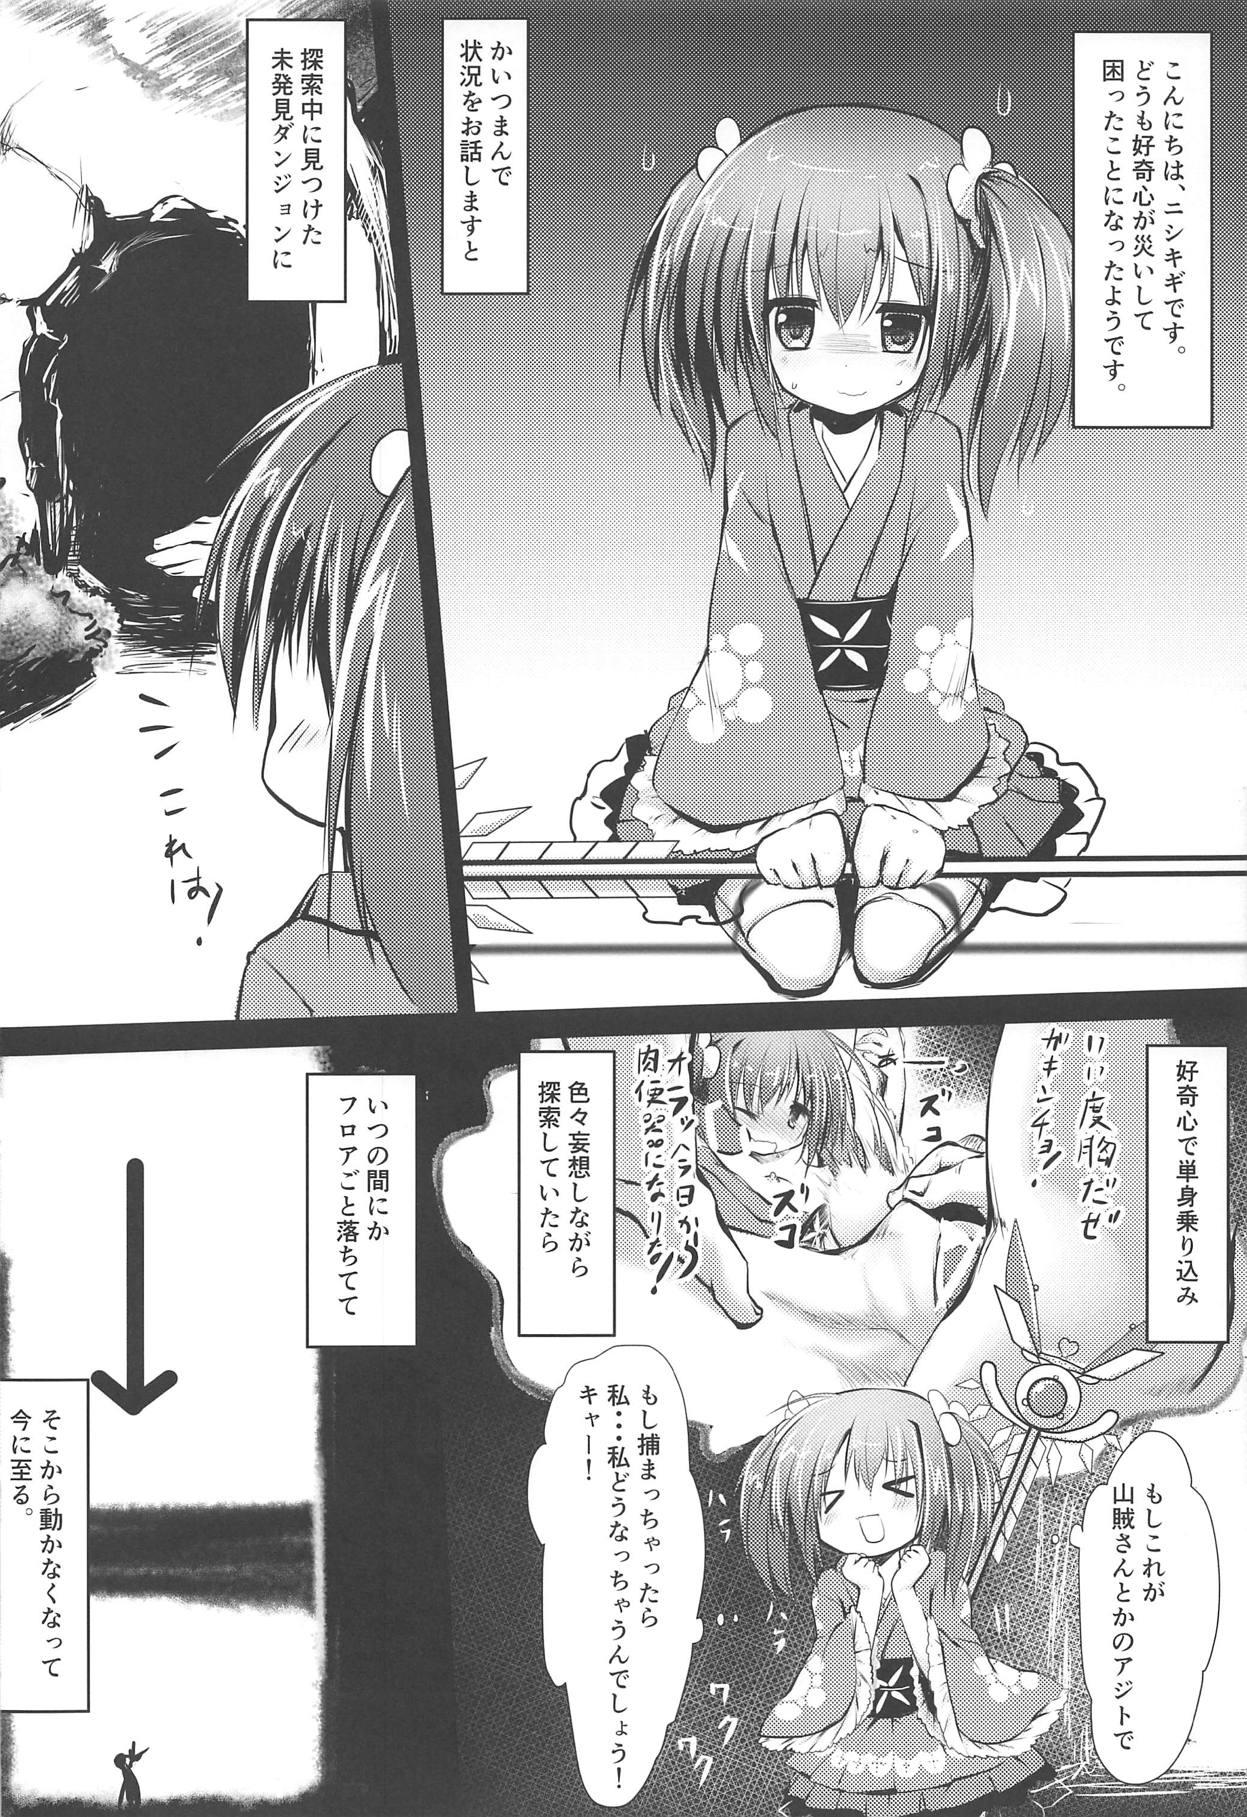 Sapphic Erotica Nishikigi VS Ero Trap D - Flower knight girl Amateur Teen - Page 3